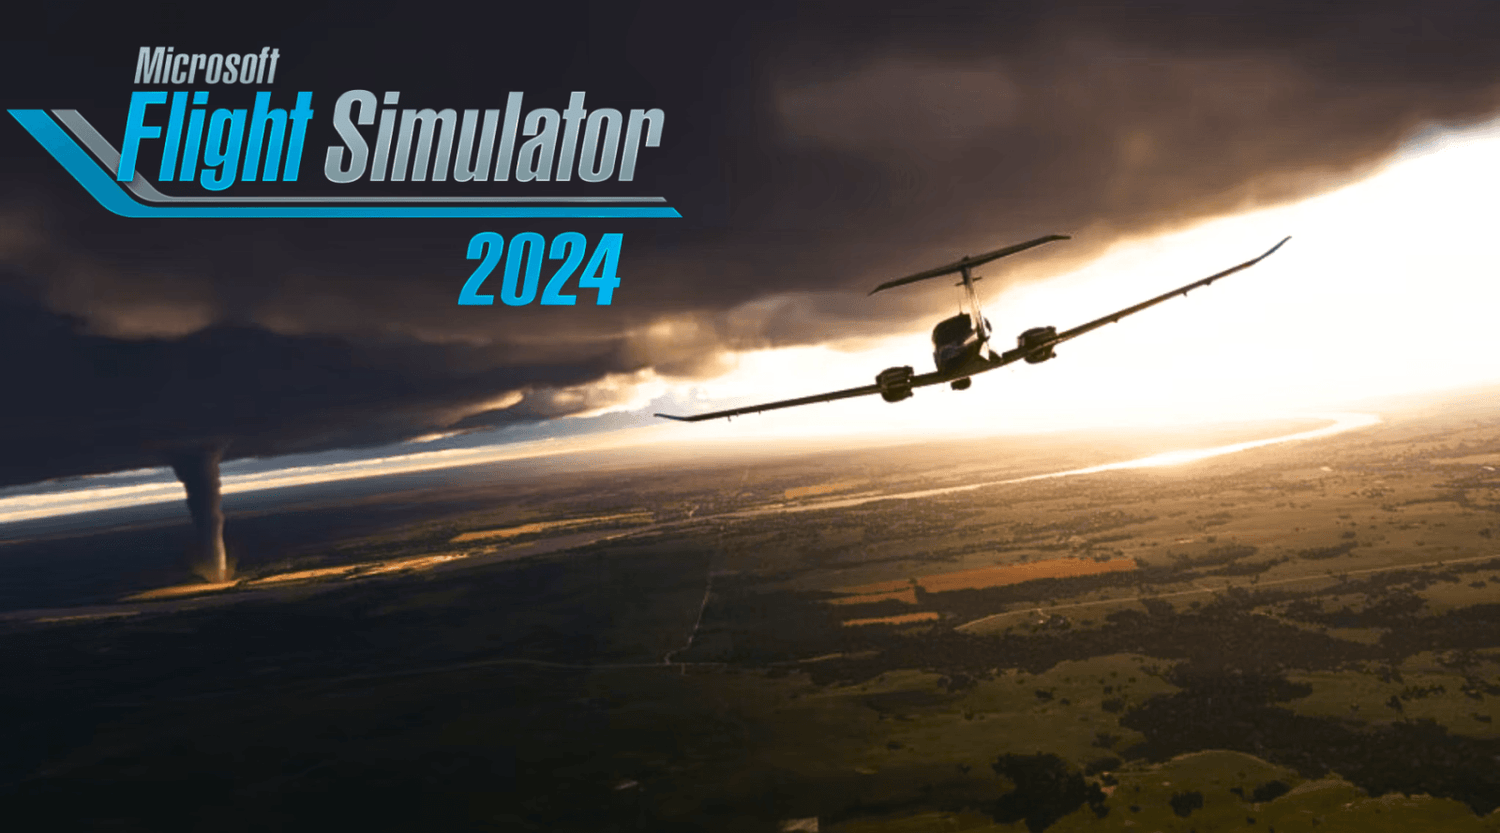 Microsoft Flight Simulator 2024 Announced, New Trailer Flies Out